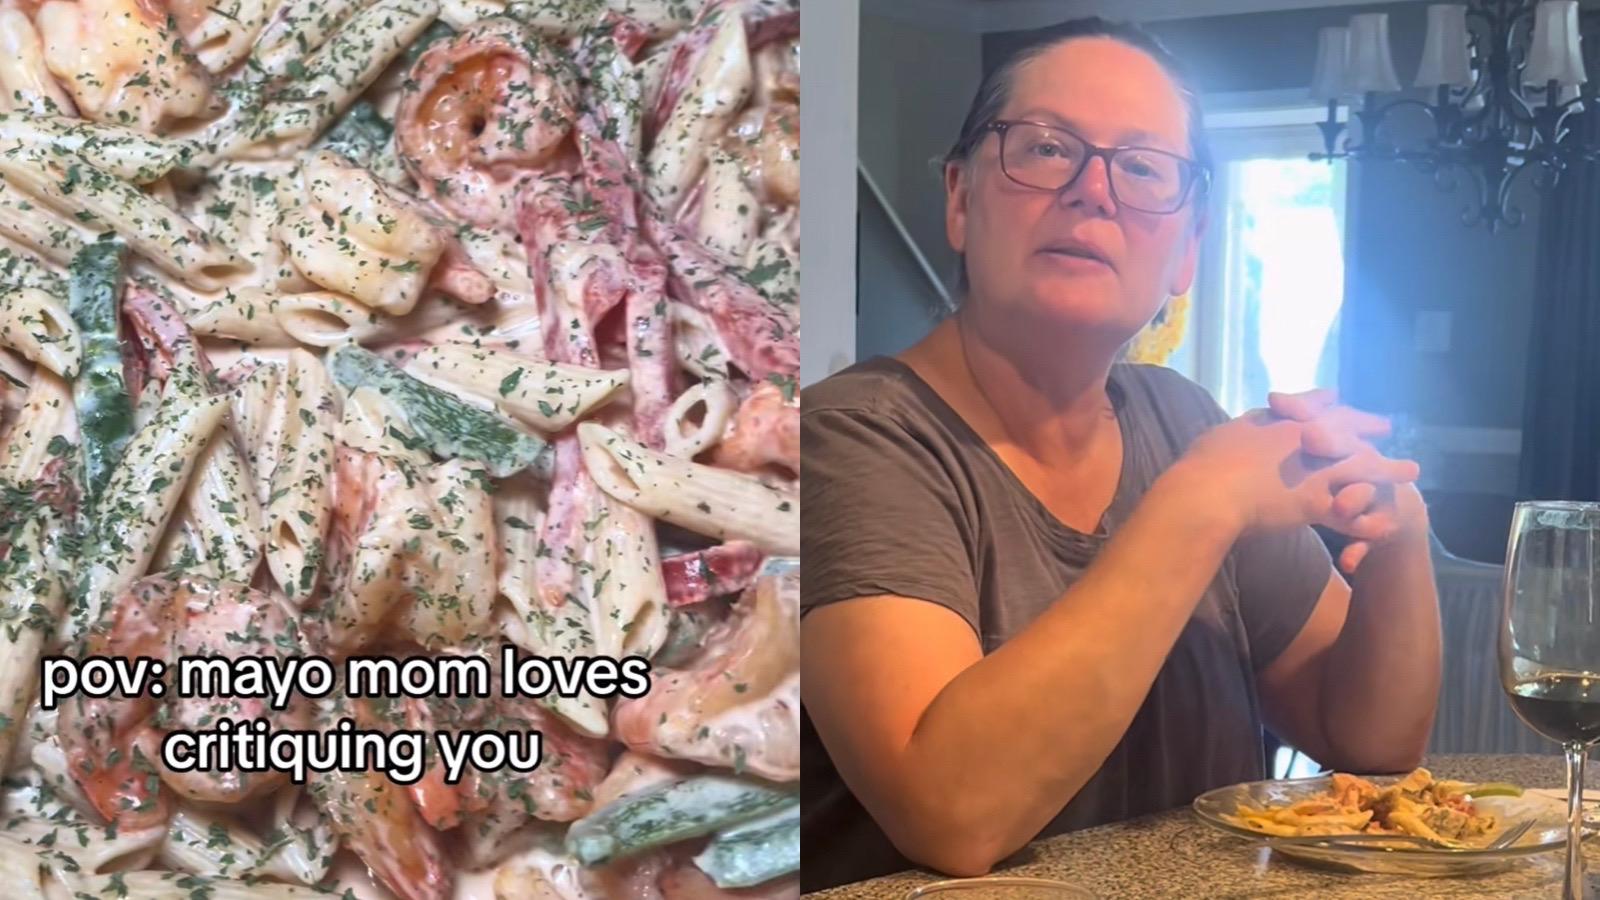 mayo mom critics daughter's cooking